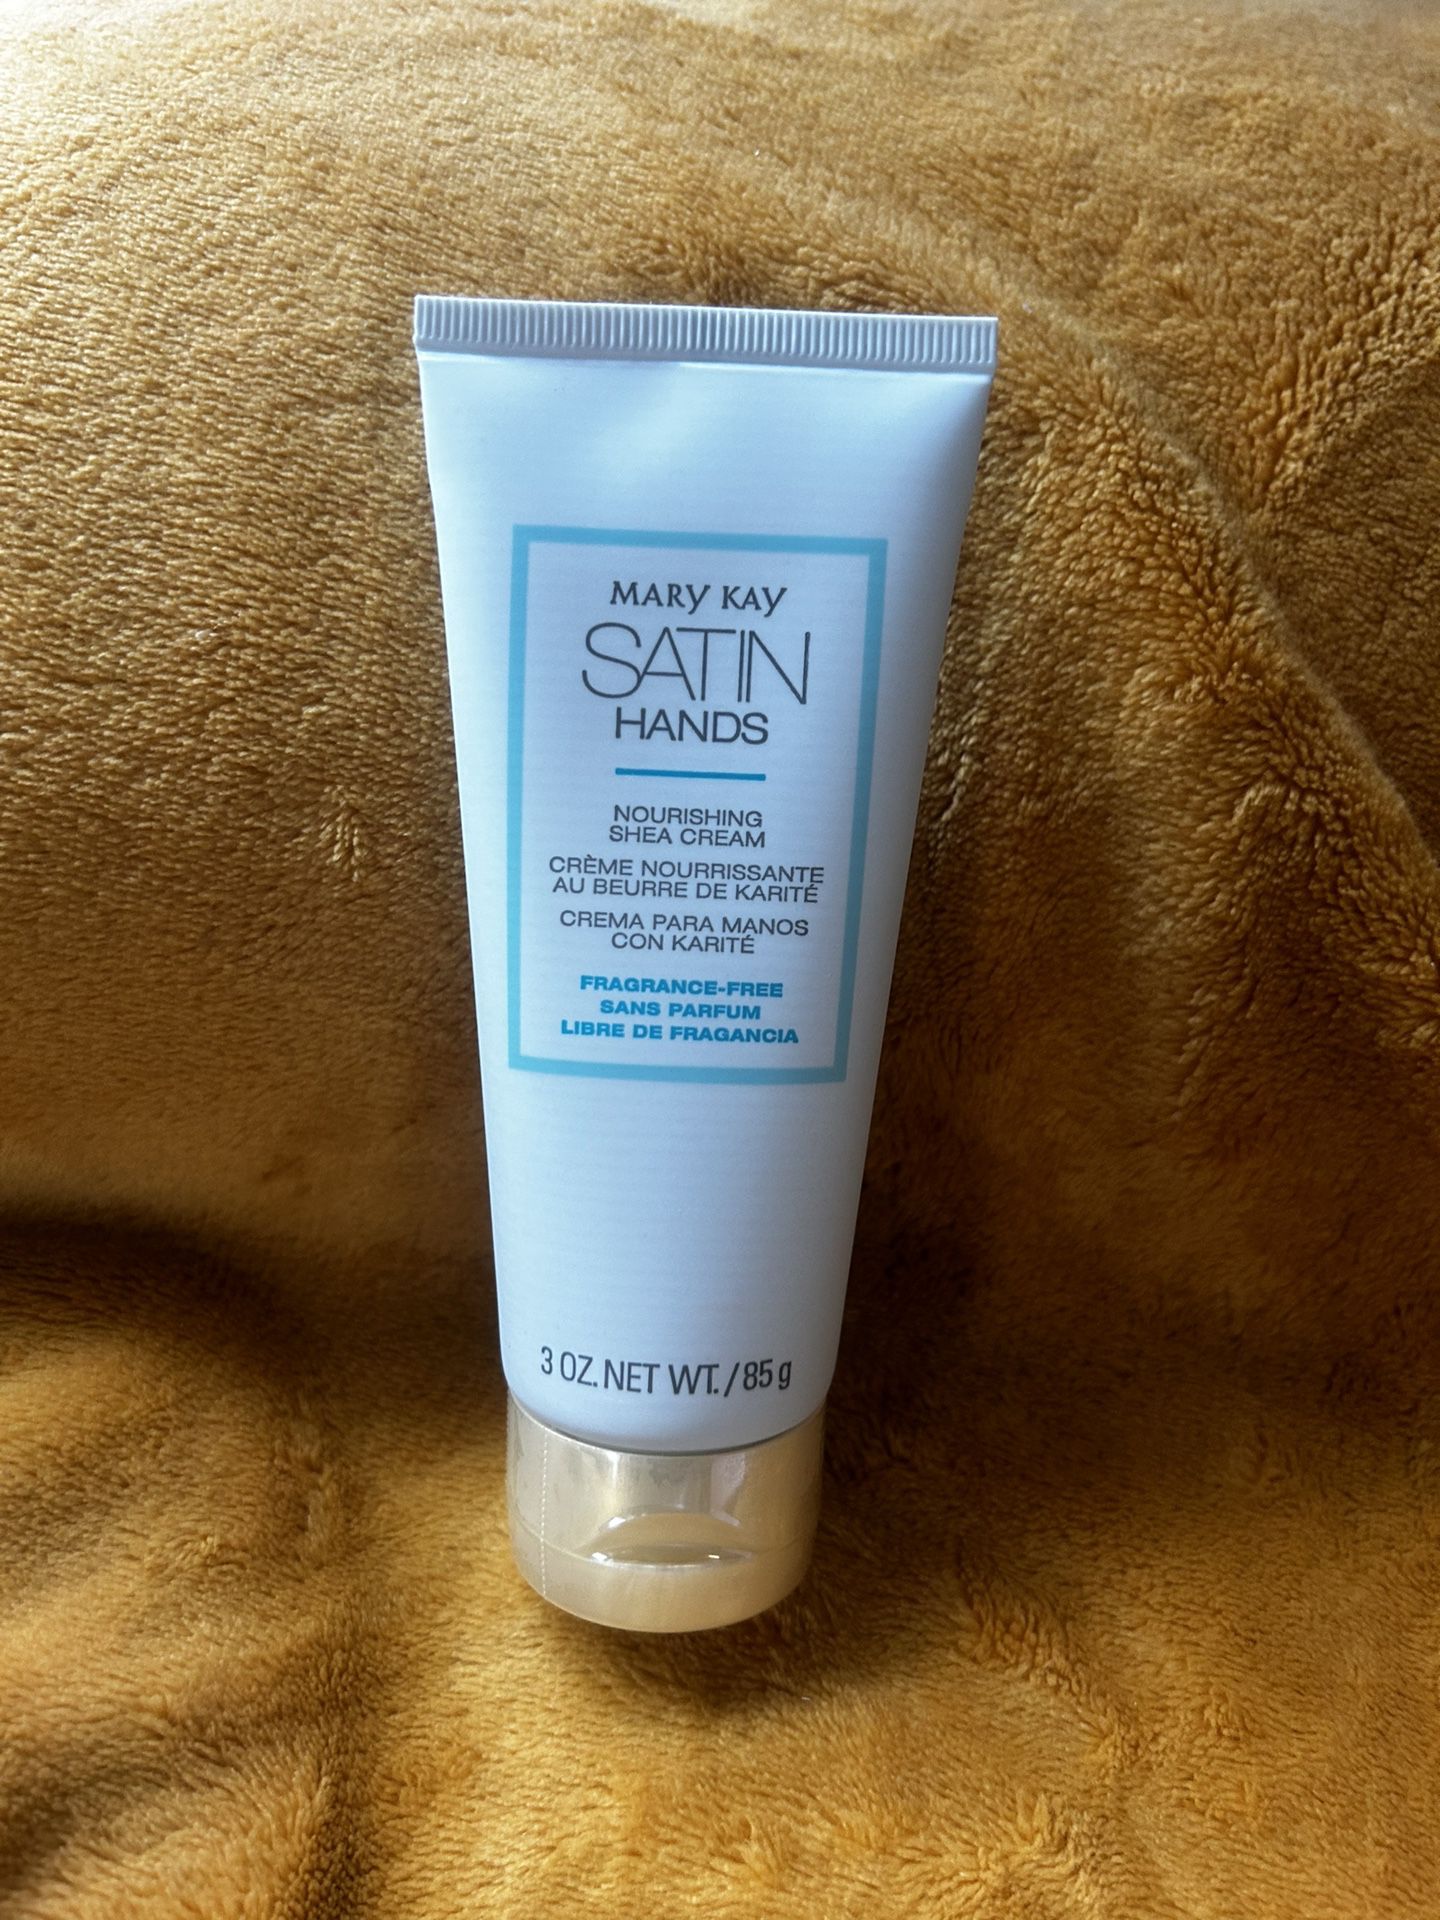 Fragrance-free Satin Hands Nourishing Shea Cream